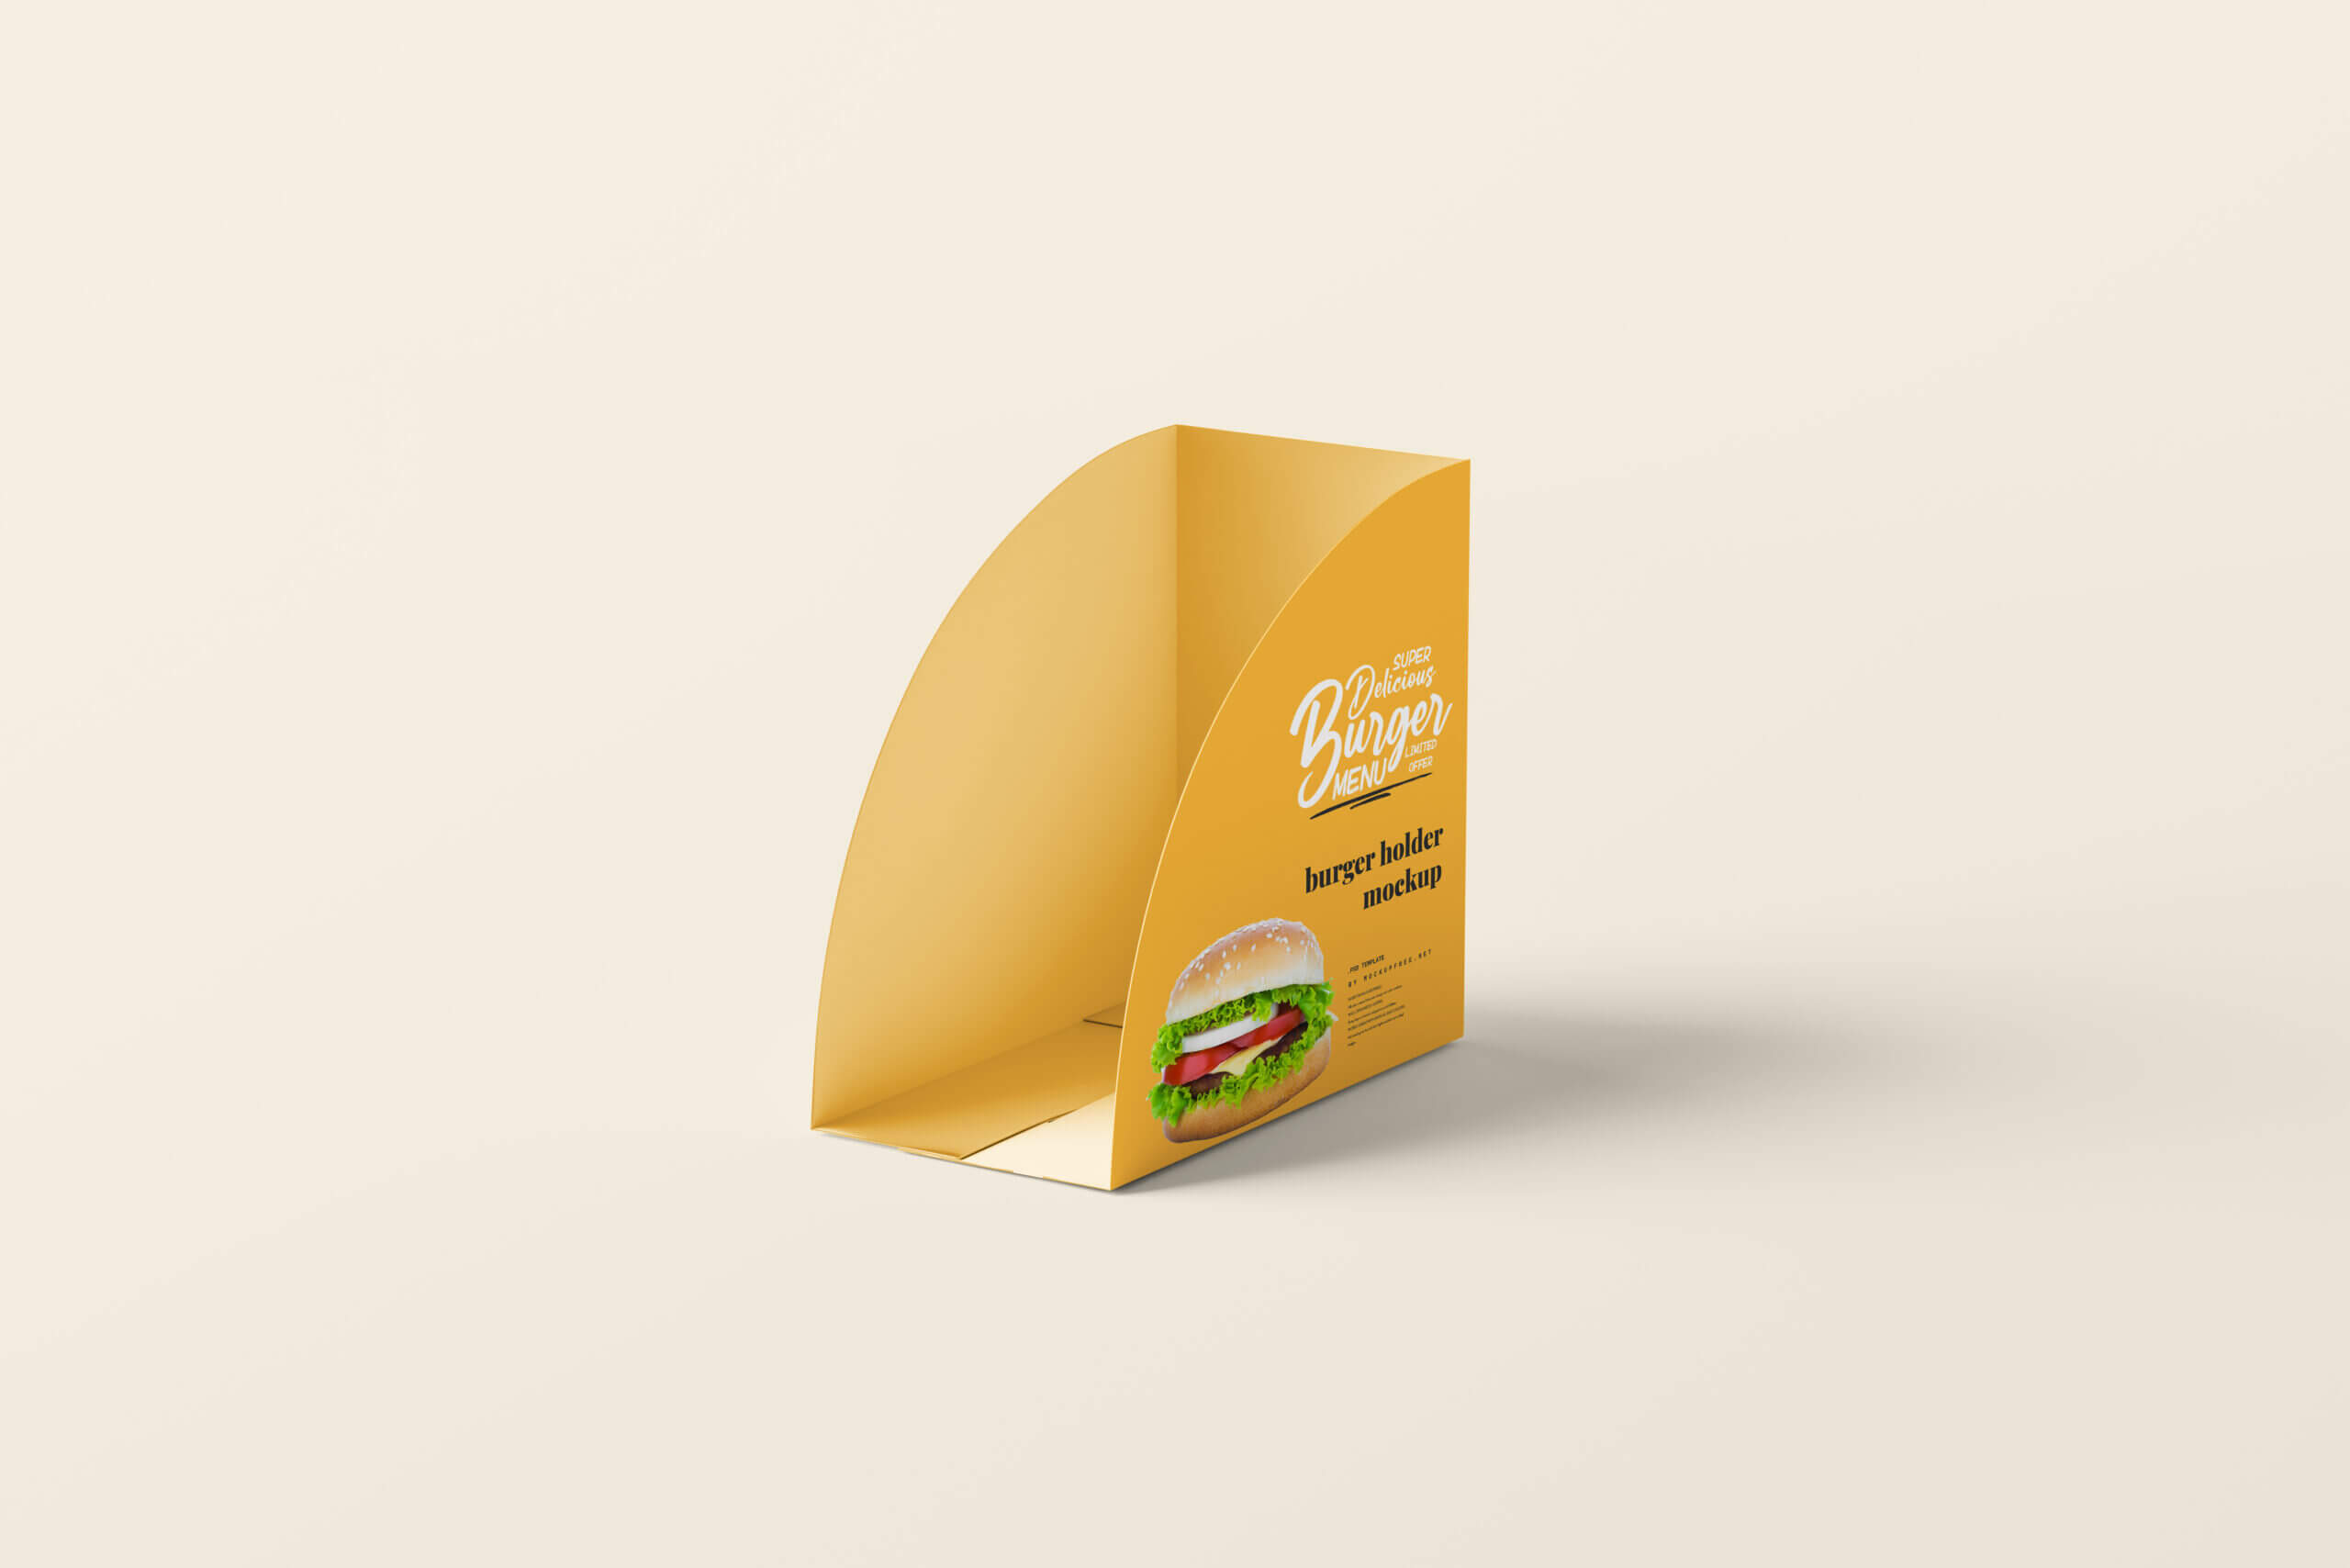 5 Free Paper Burger Holder Packaging Mockup PSD Files